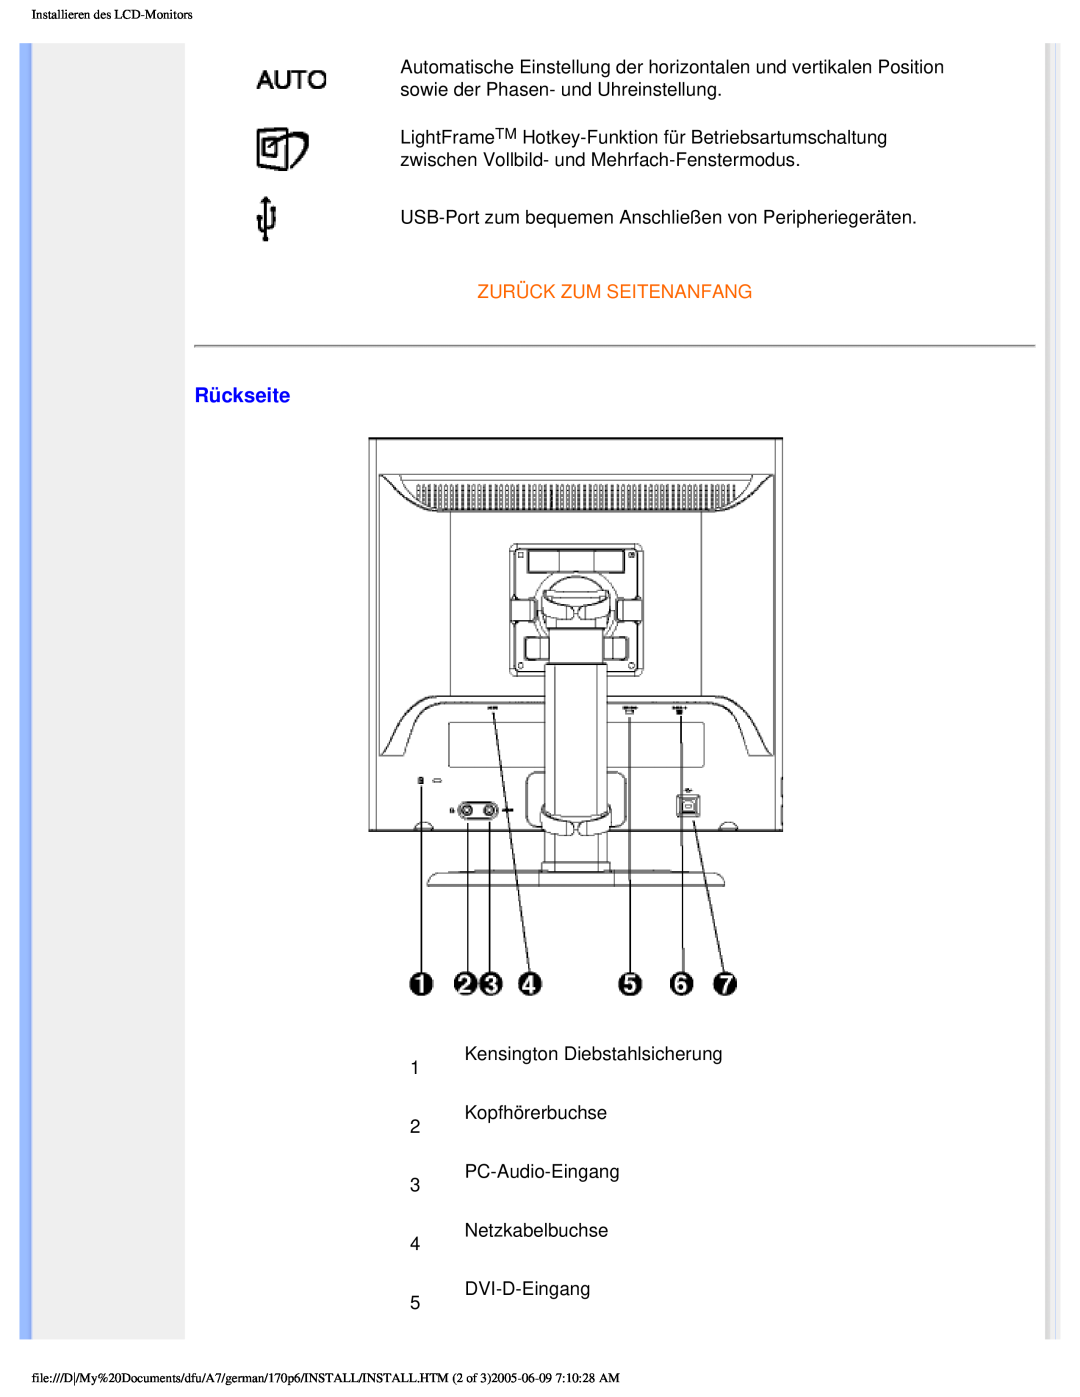 Philips 170p6 user manual Rückseite, Zurück Zum Seitenanfang 